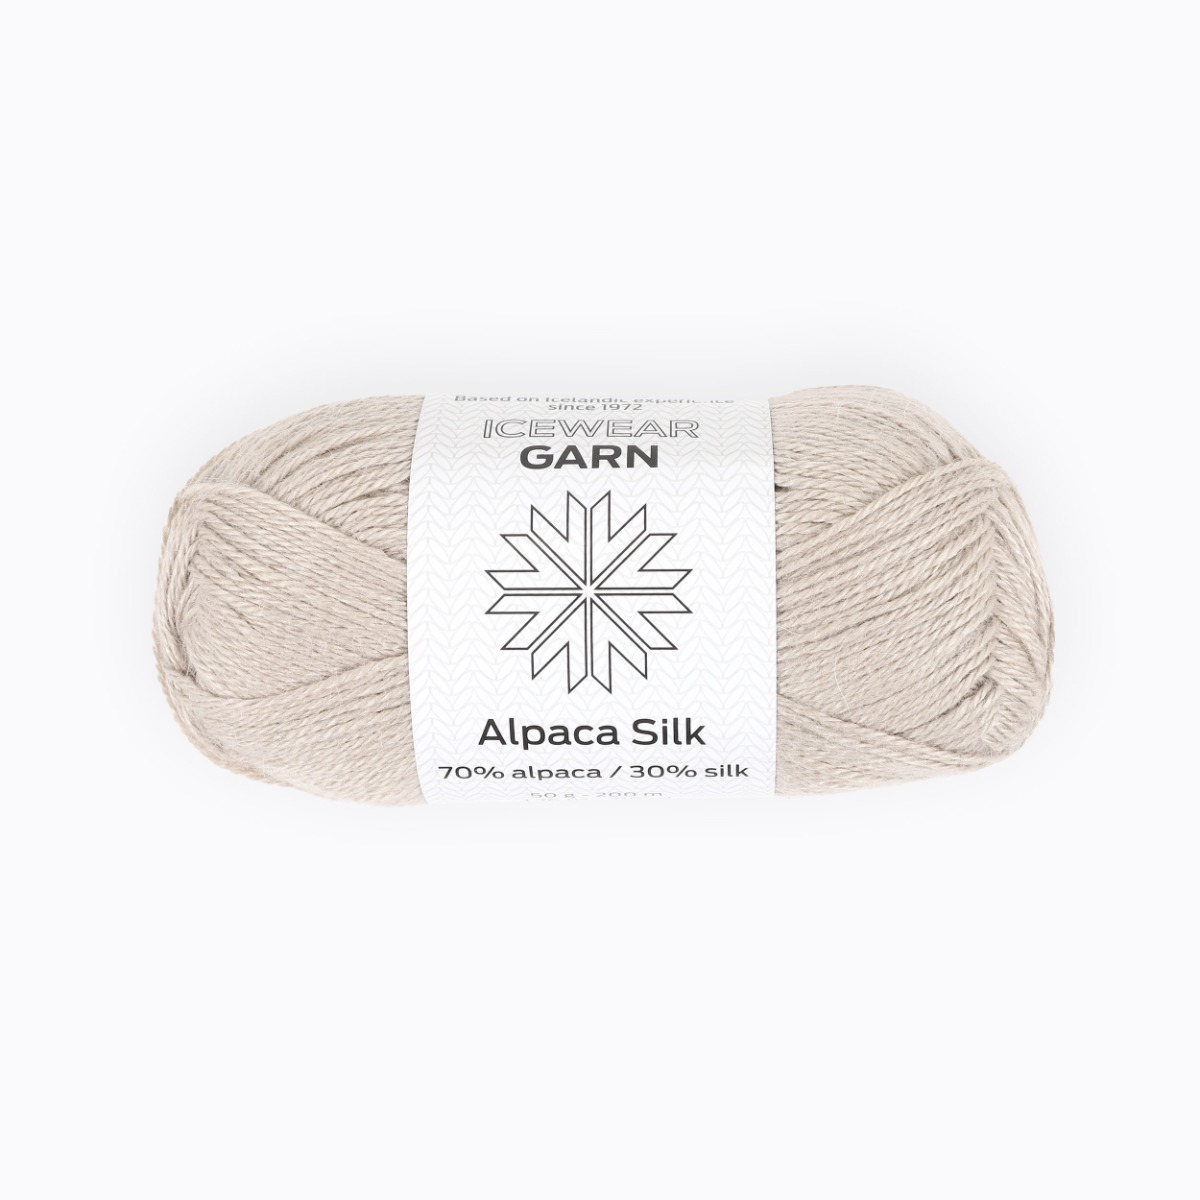 Indsigt Klappe falskhed Alpaca Silk | Iceweargarn